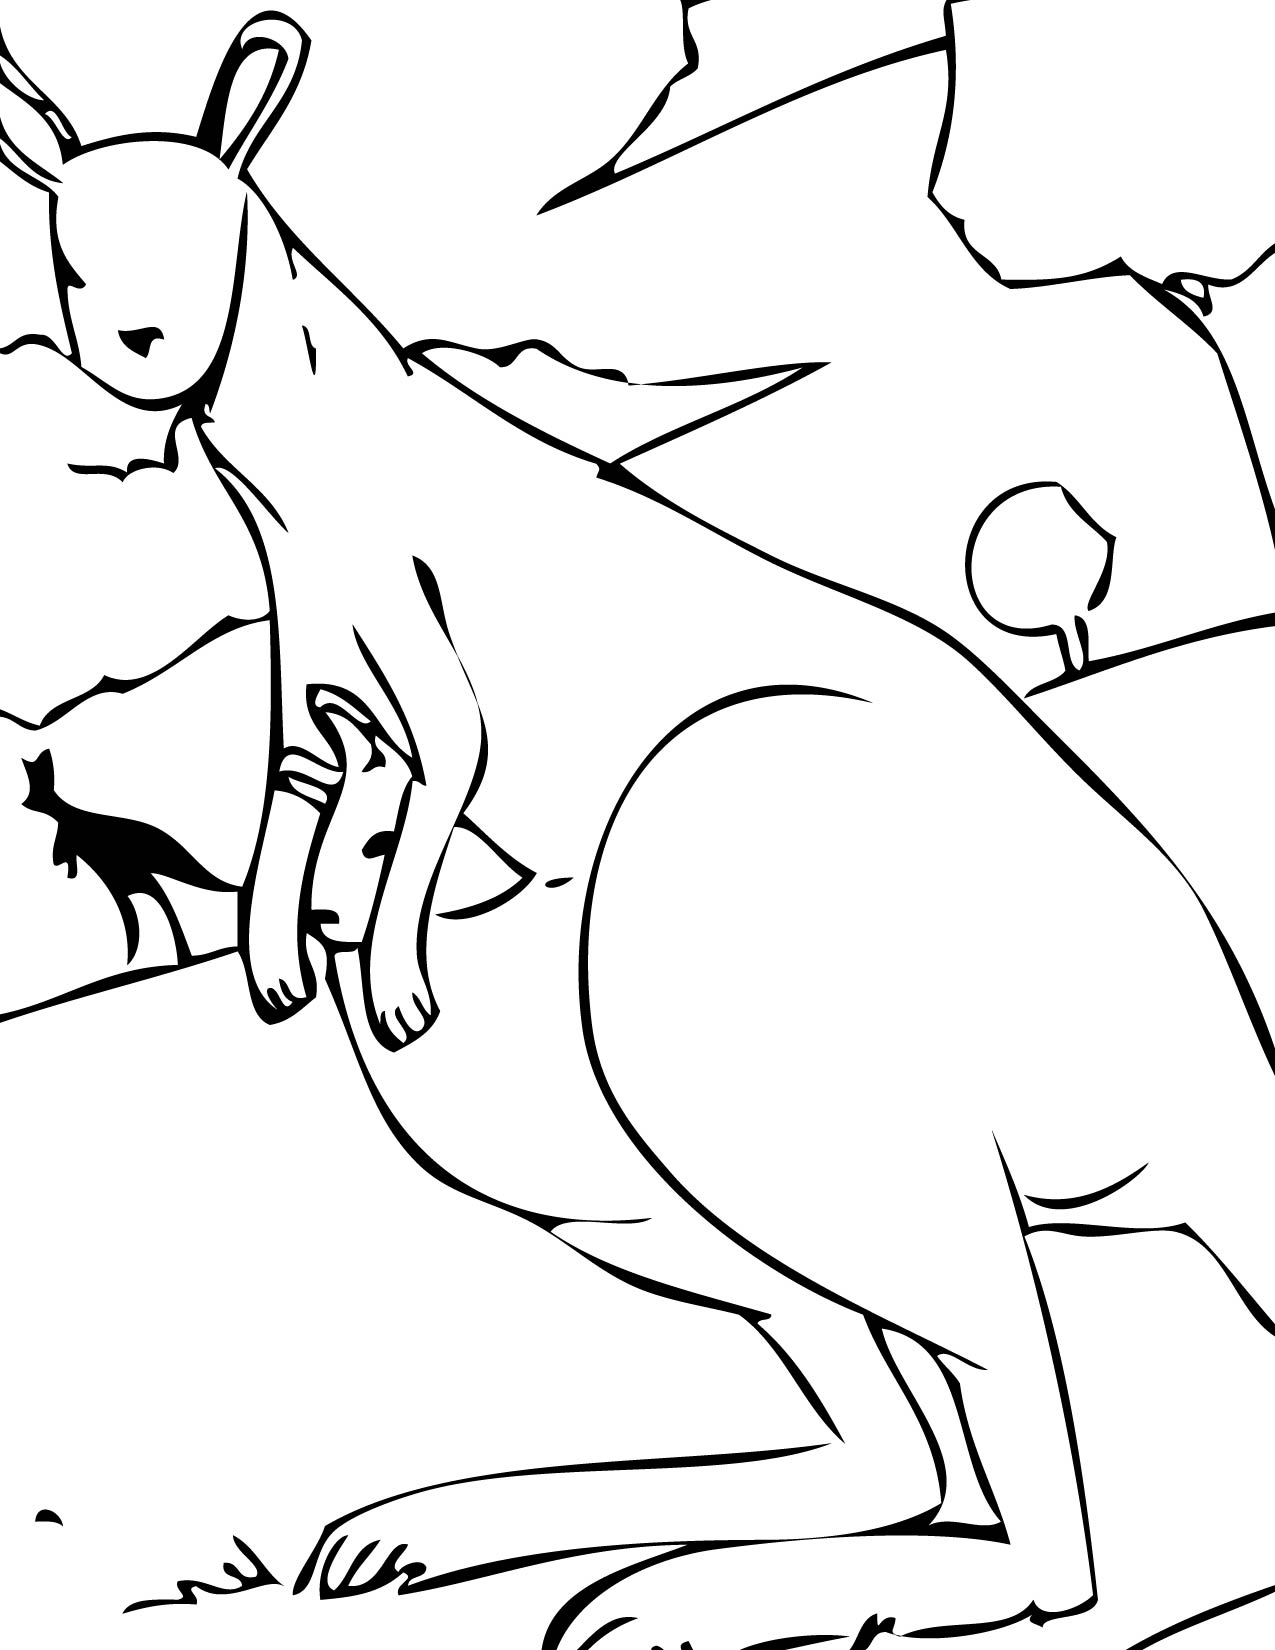 Coloring page: Kangaroo (Animals) #9119 - Free Printable Coloring Pages